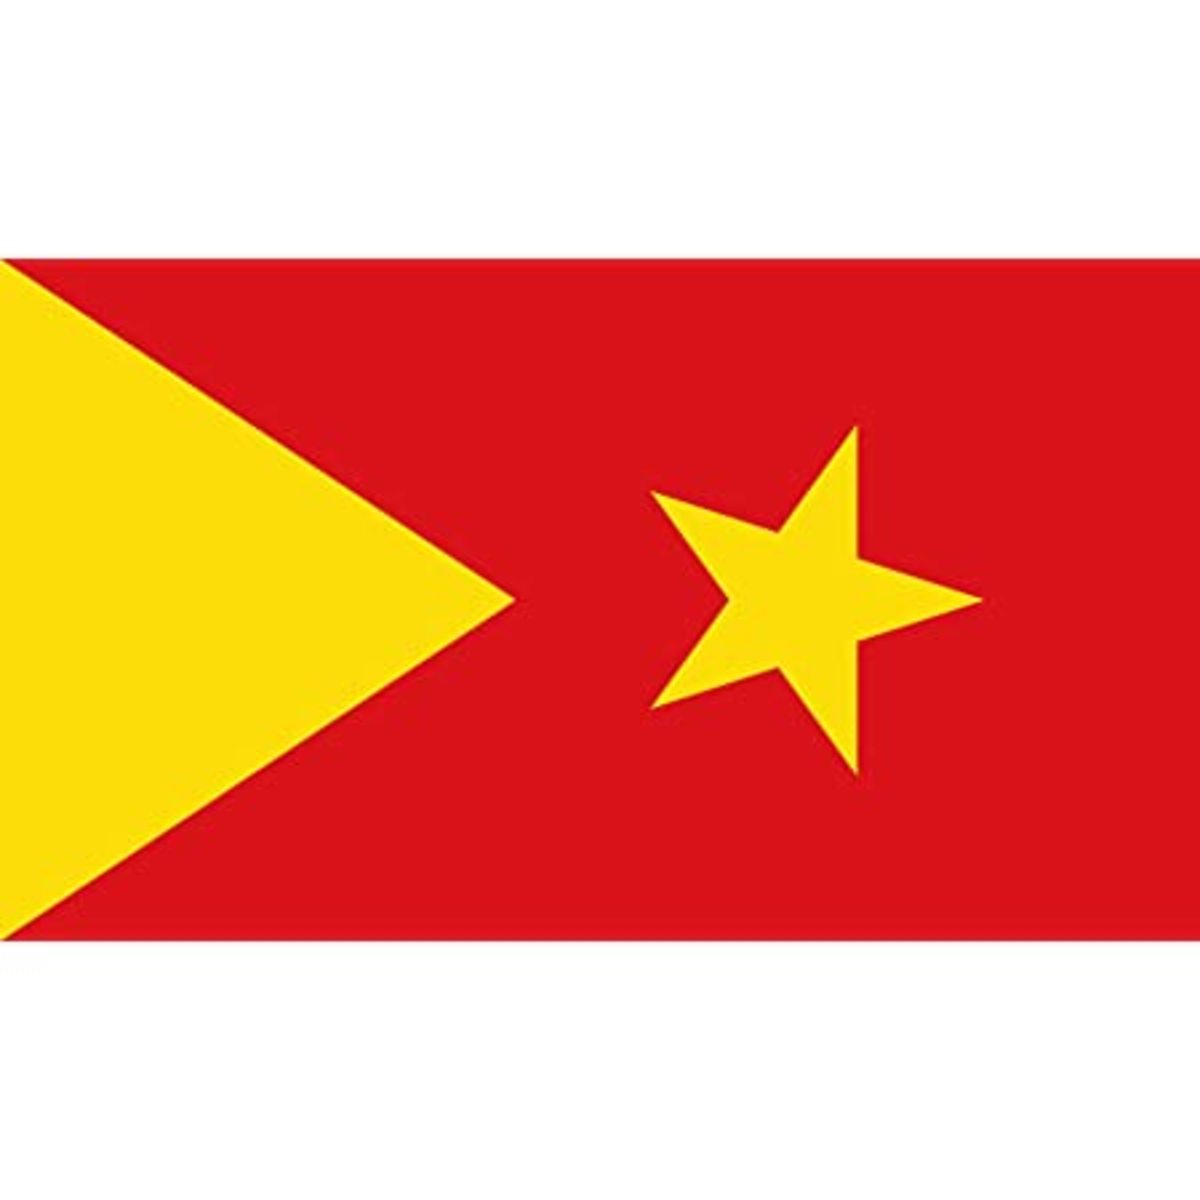 The Tigray flag